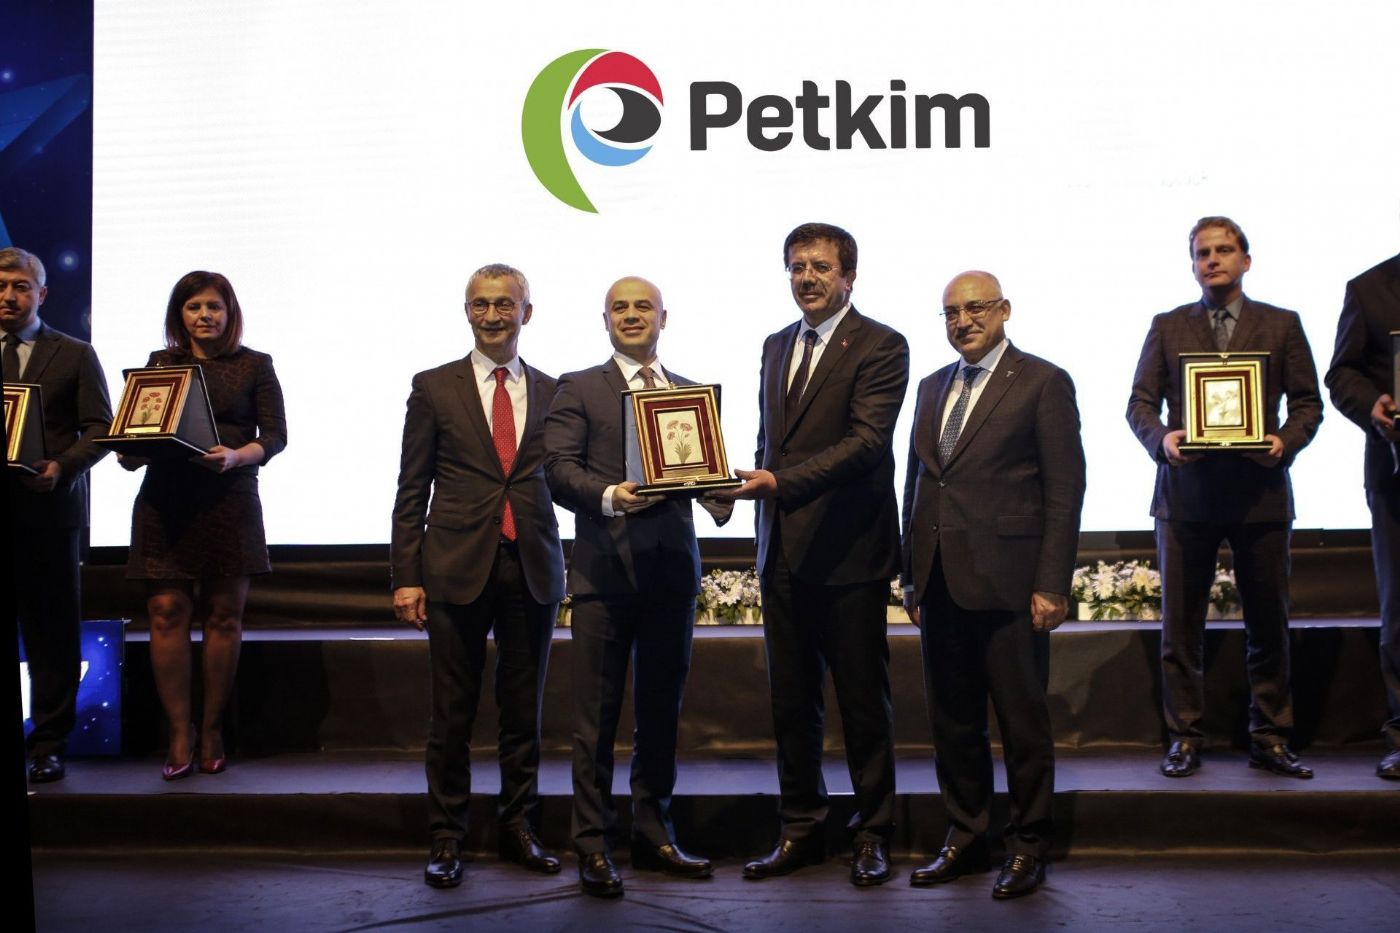 Aegean’s export star is Petkim once again